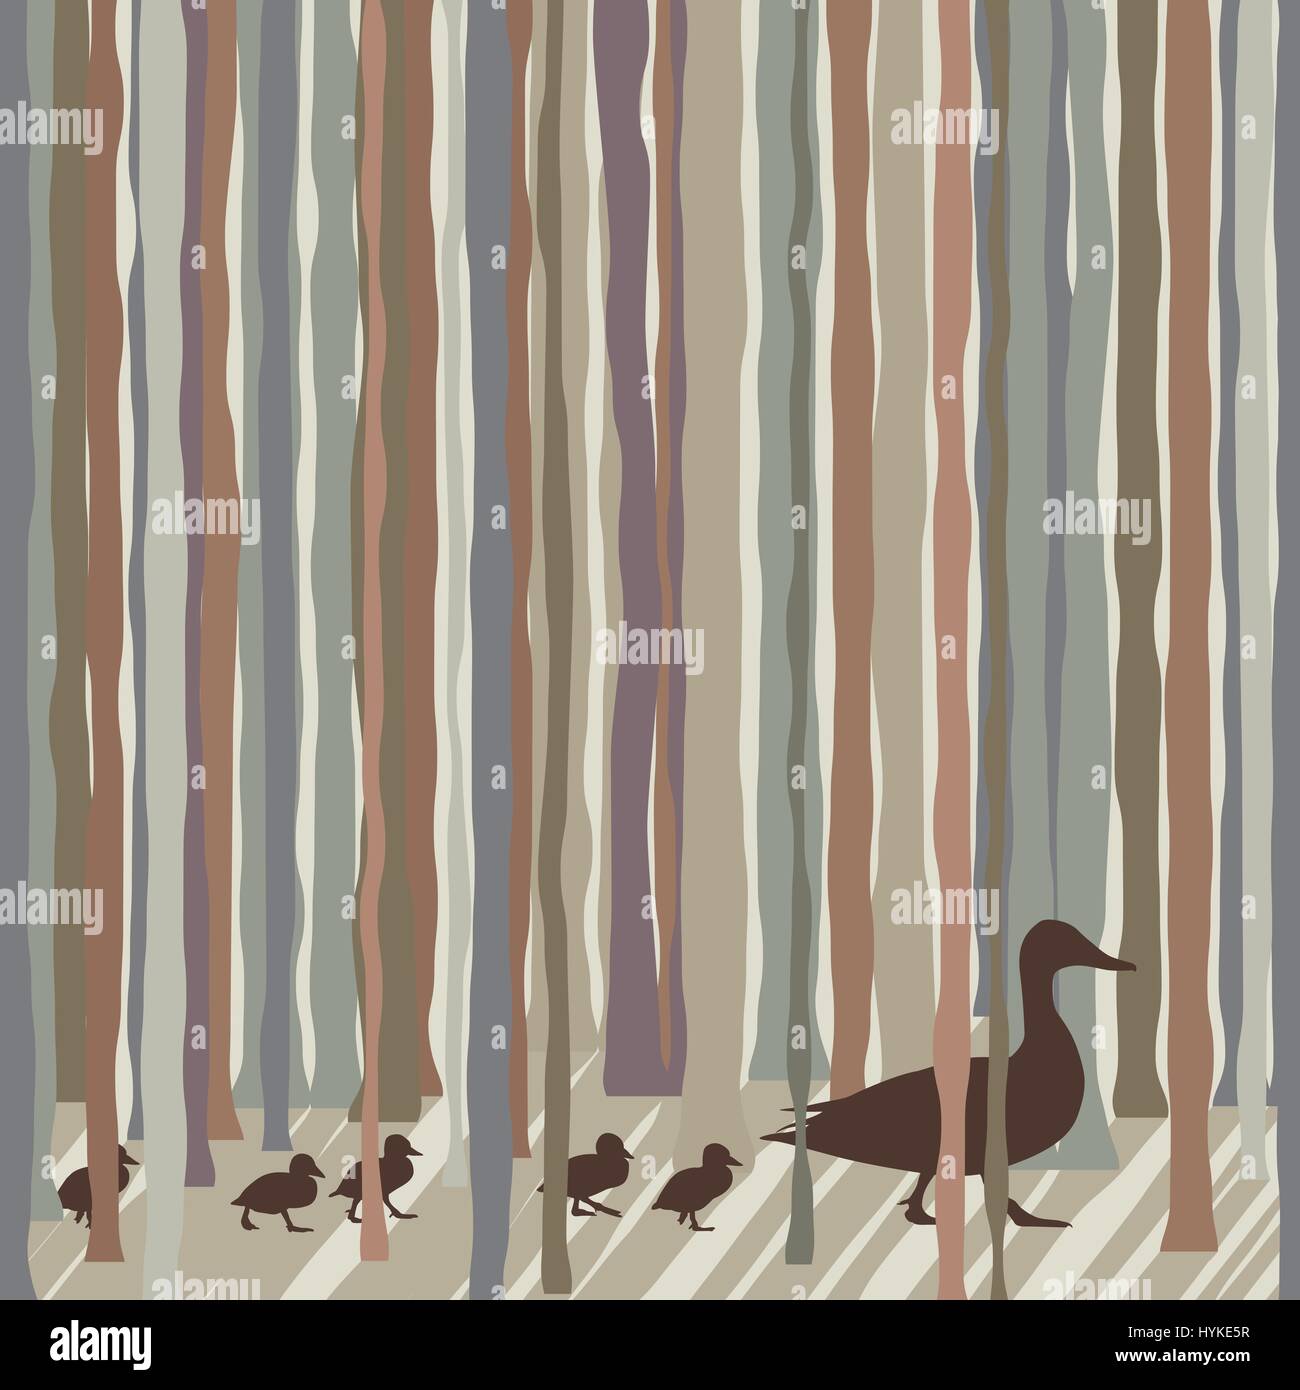 Bearbeitbares Vektor-Illustration einer Ente Entenküken durch abstrakte Wald führt Stock Vektor